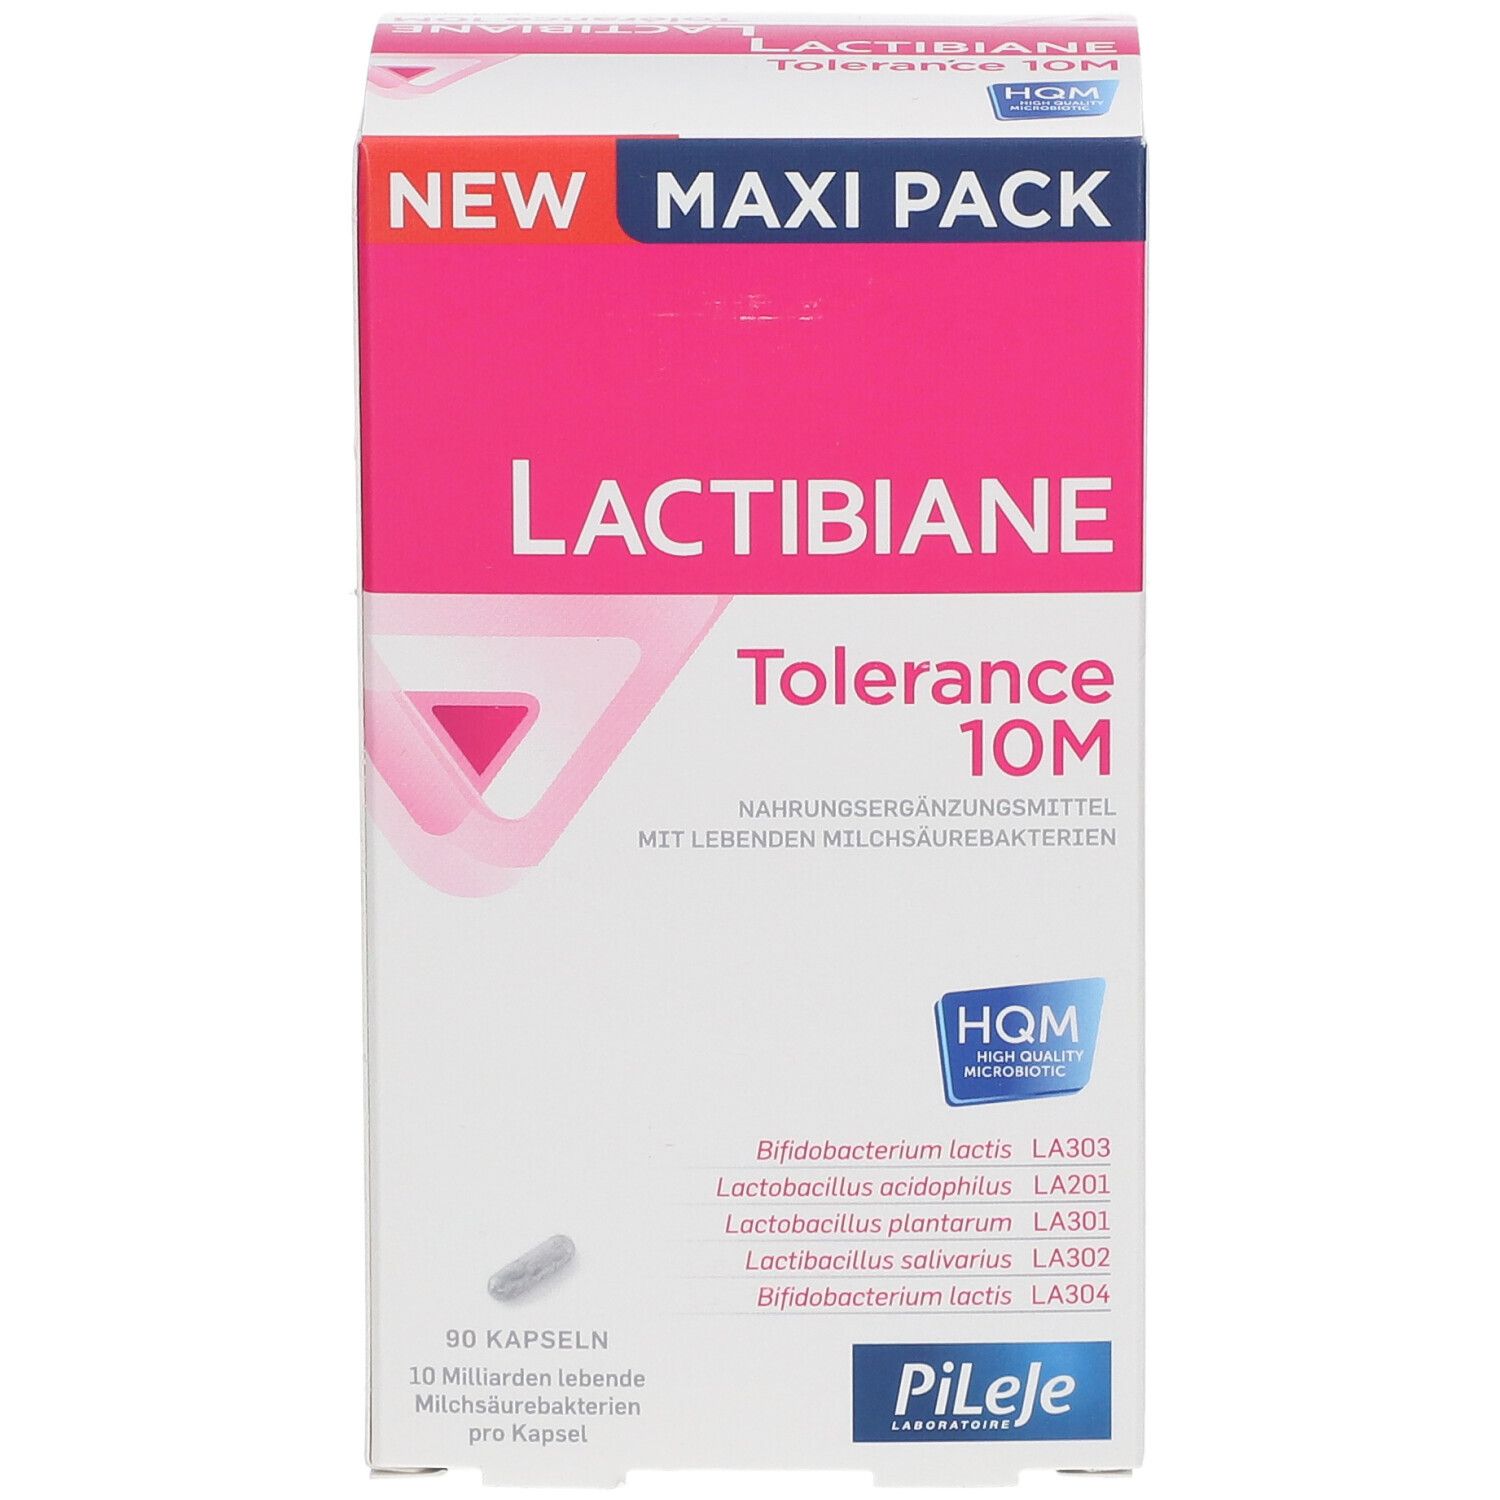 Lactibiane Tolerance 10M